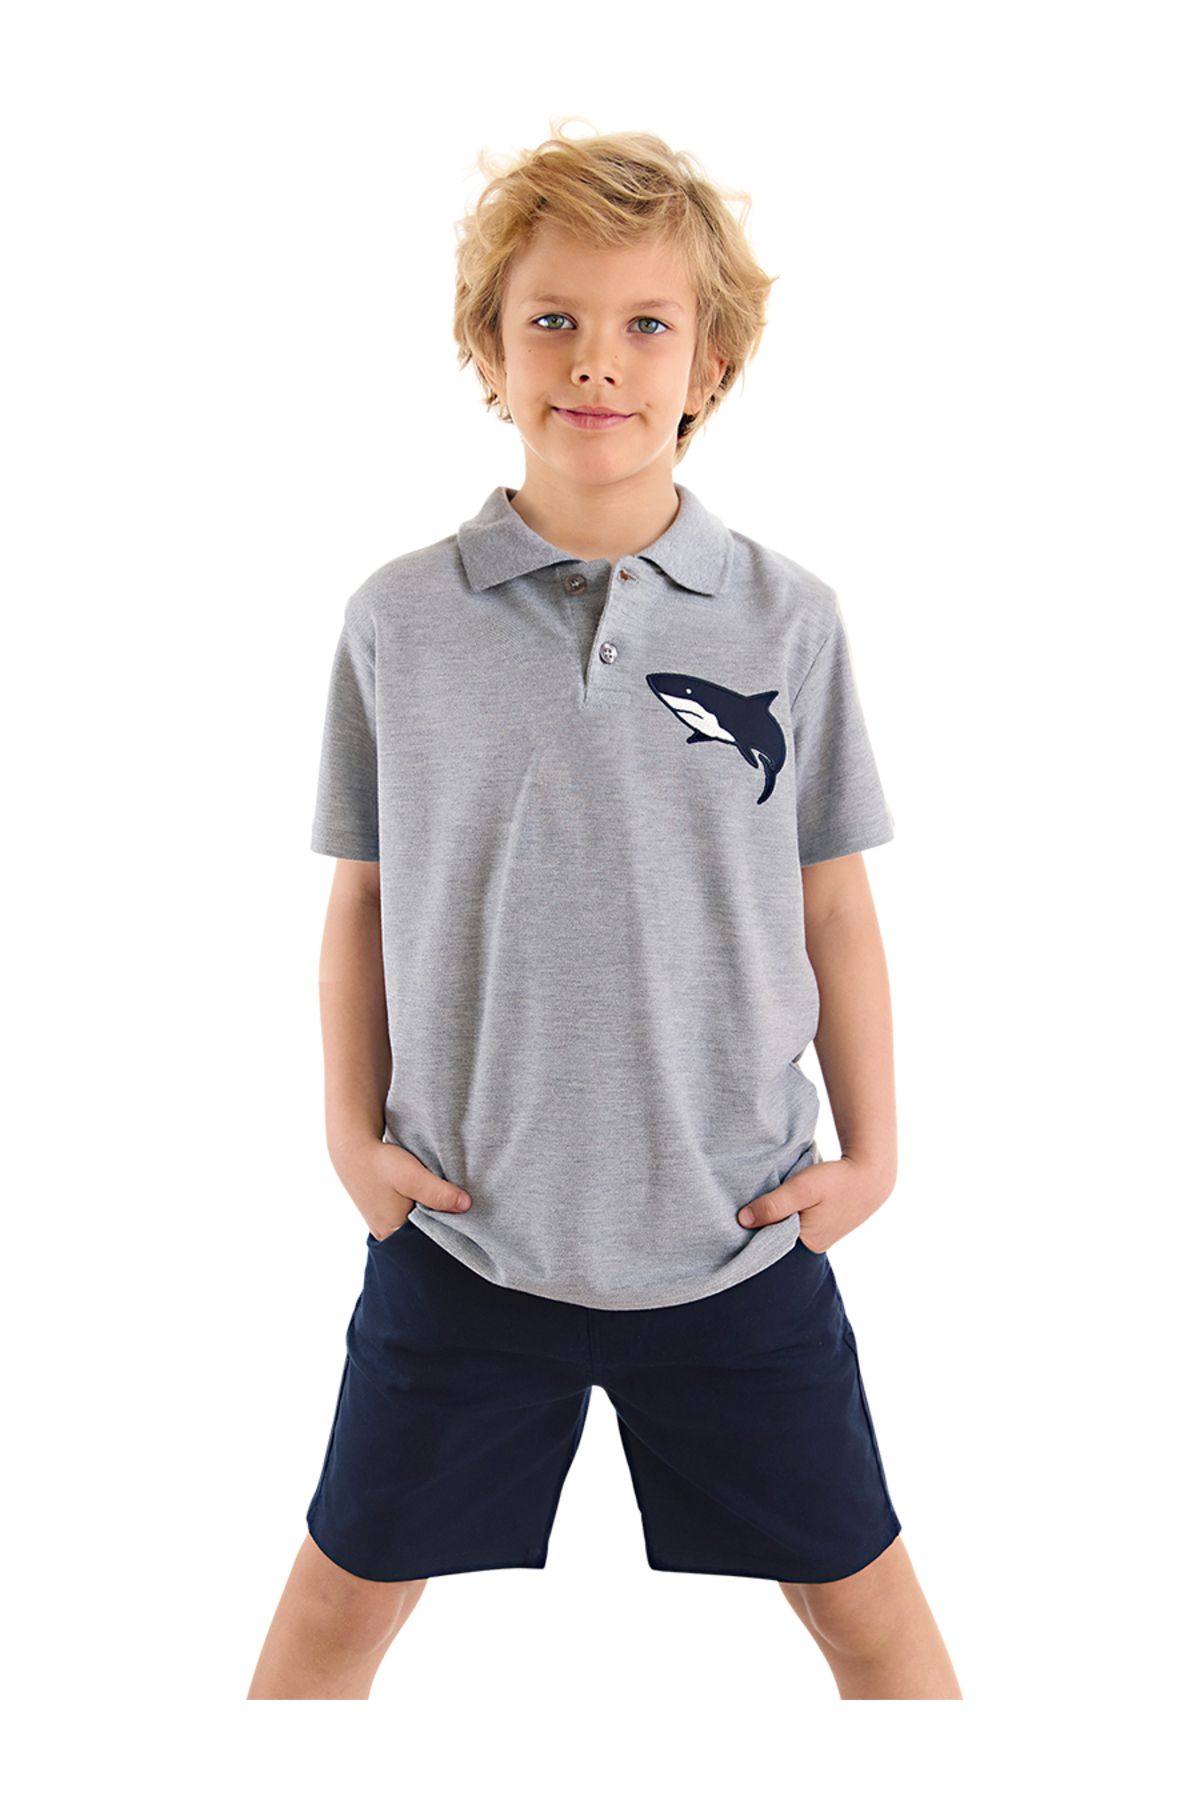 MSHB&G Shark Erkek Çocuk Polo Yaka T-shirt Şort Takım